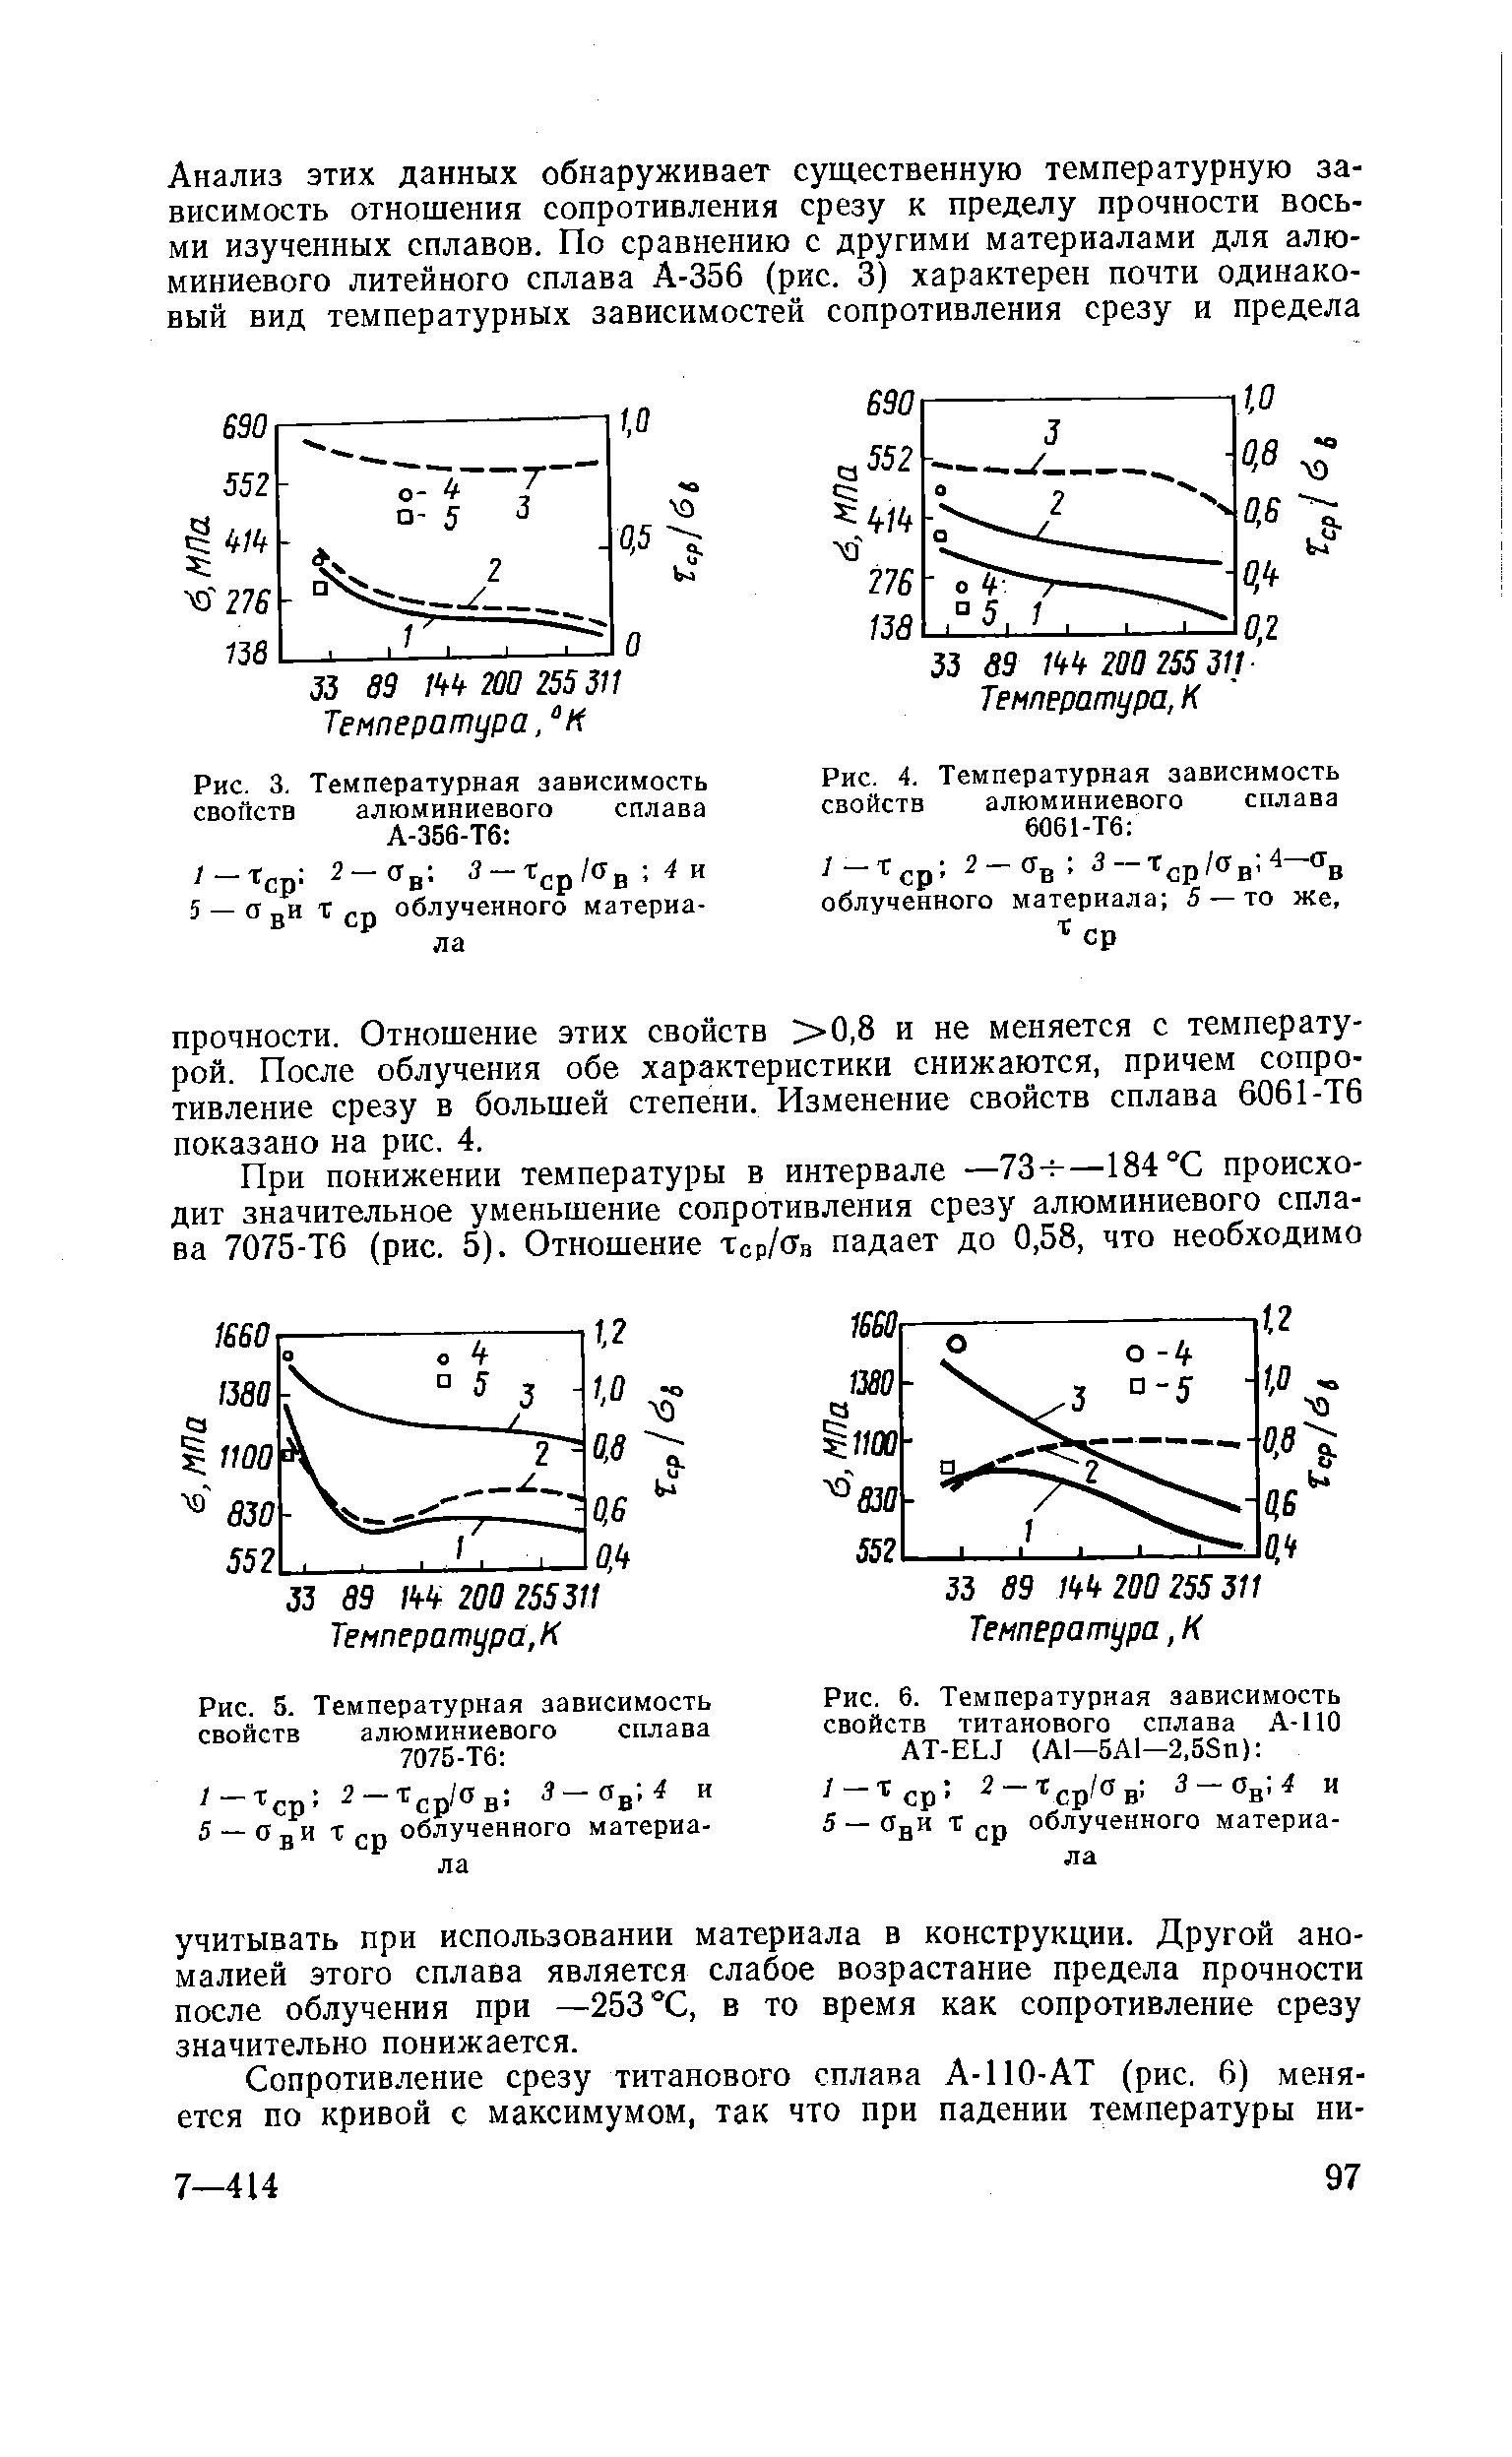 Рис. 6. Температурная зависимость свойств титанового сплава А-110 AT-ELJ (Al-5AI-2,5Sn) 
